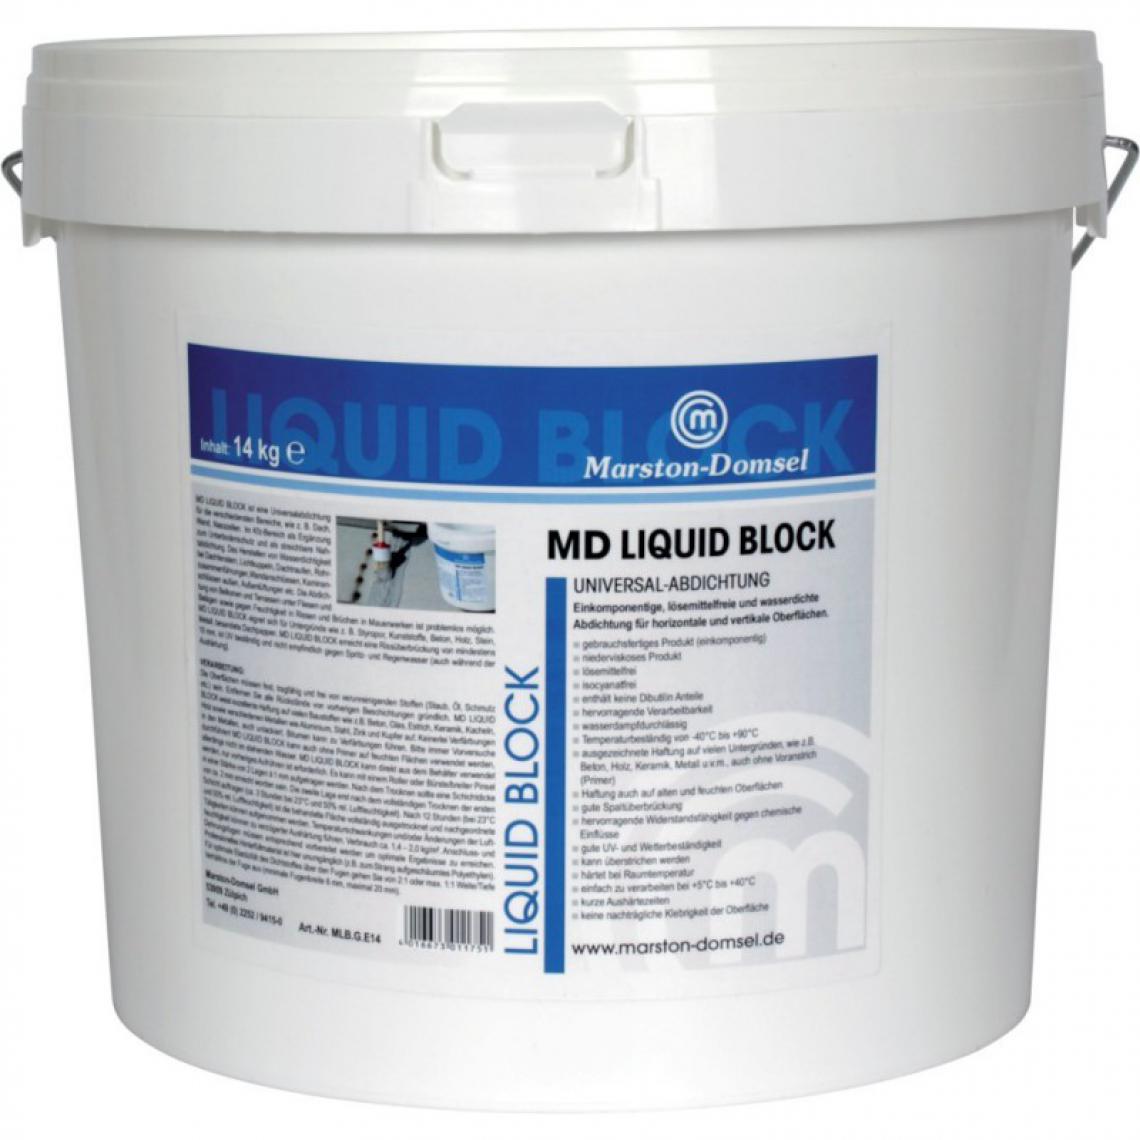 marque generique - Joint MD LIQUID BLOCK Eimer 14kg - Colle & adhésif